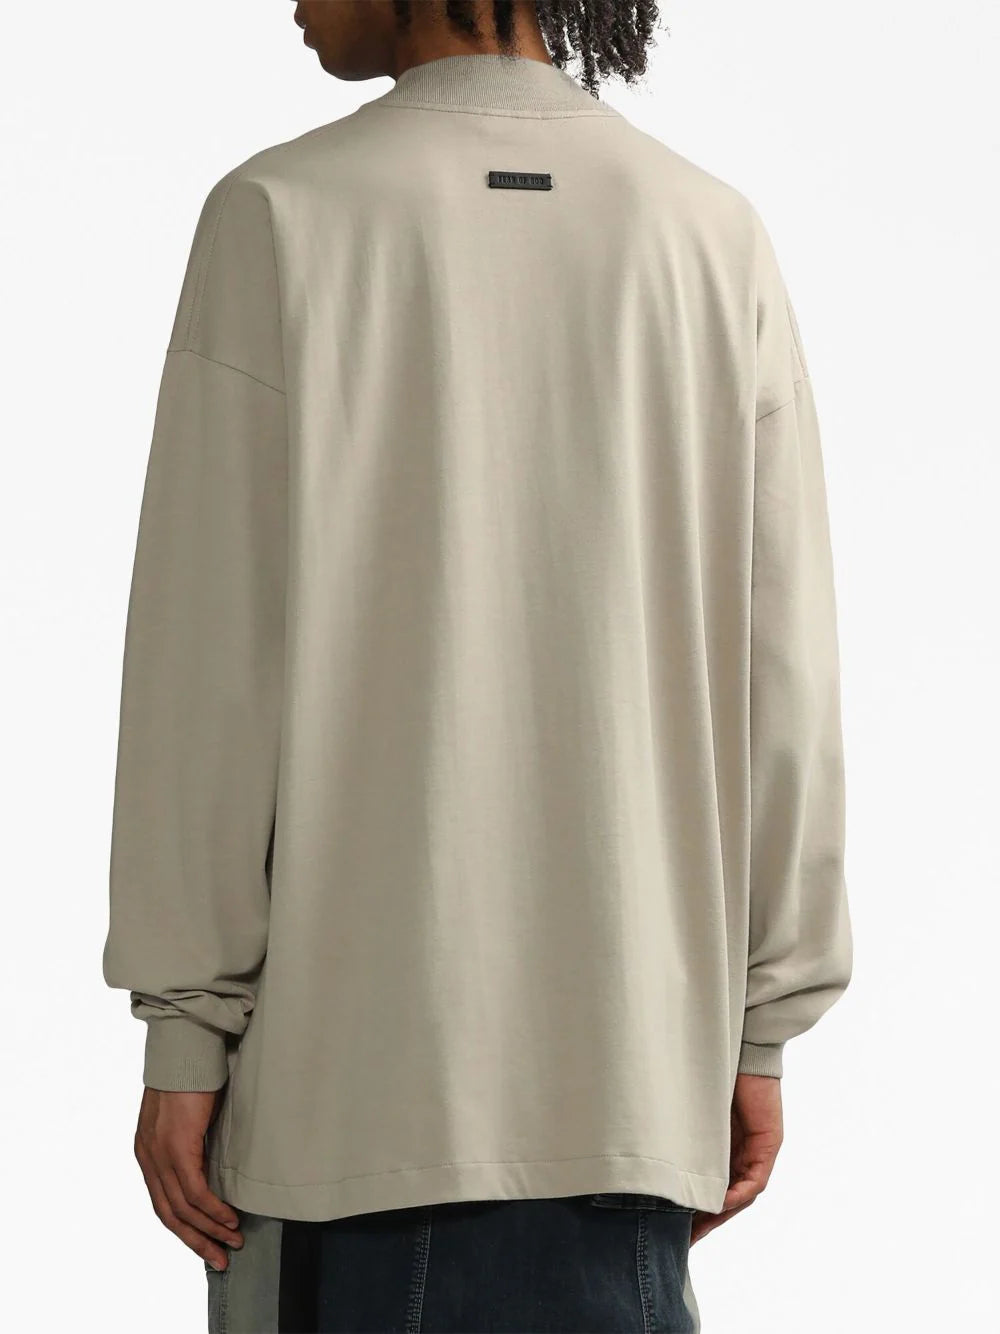 FEAR OF GOD Eternal Cotton Long Sleeve T-Shirt Beige - MAISONDEFASHION.COM